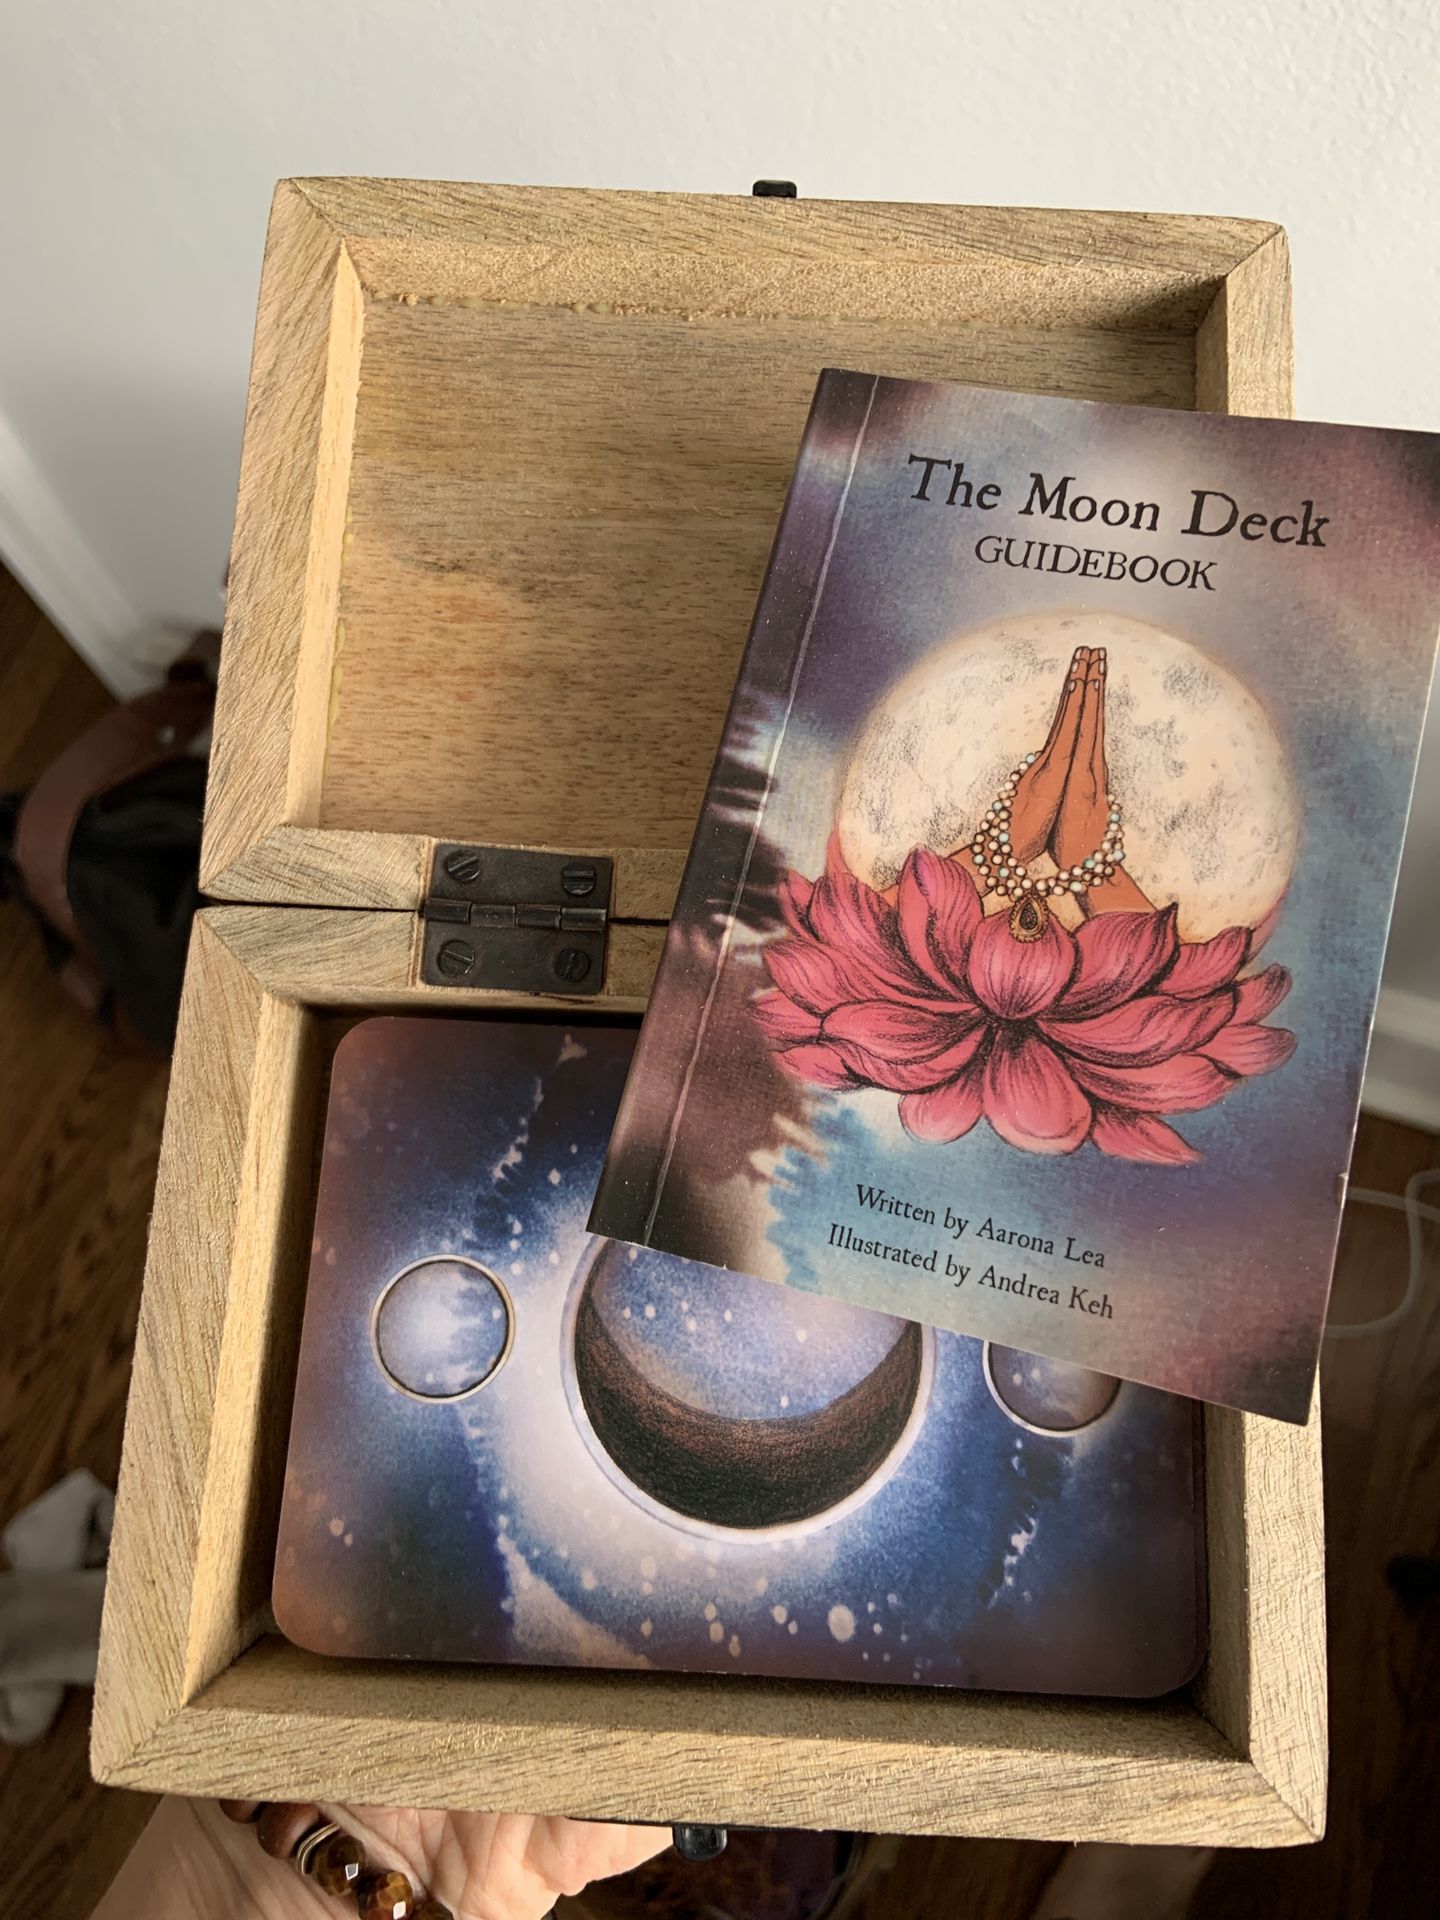 Brand new moon deck + beautiful wooden box